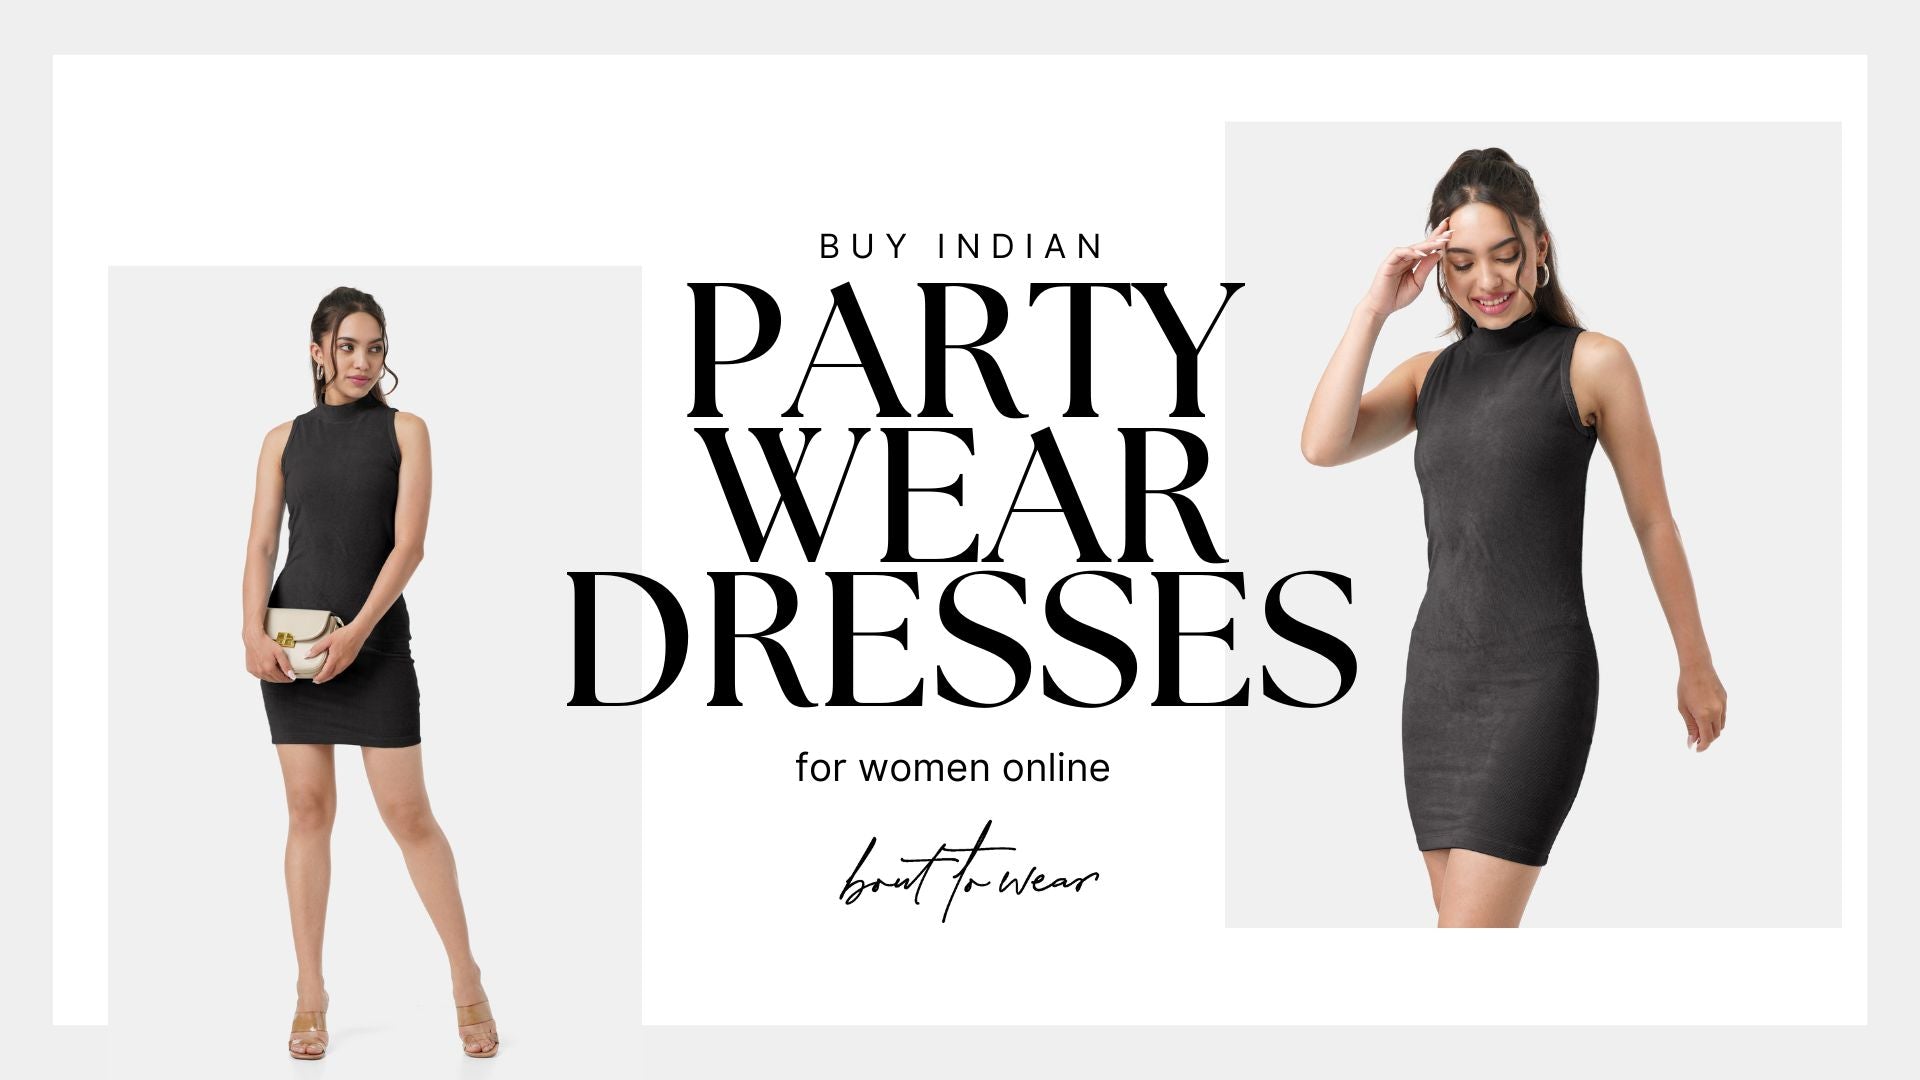 Buy Indian Party Wear Dresses for Women & Men Online